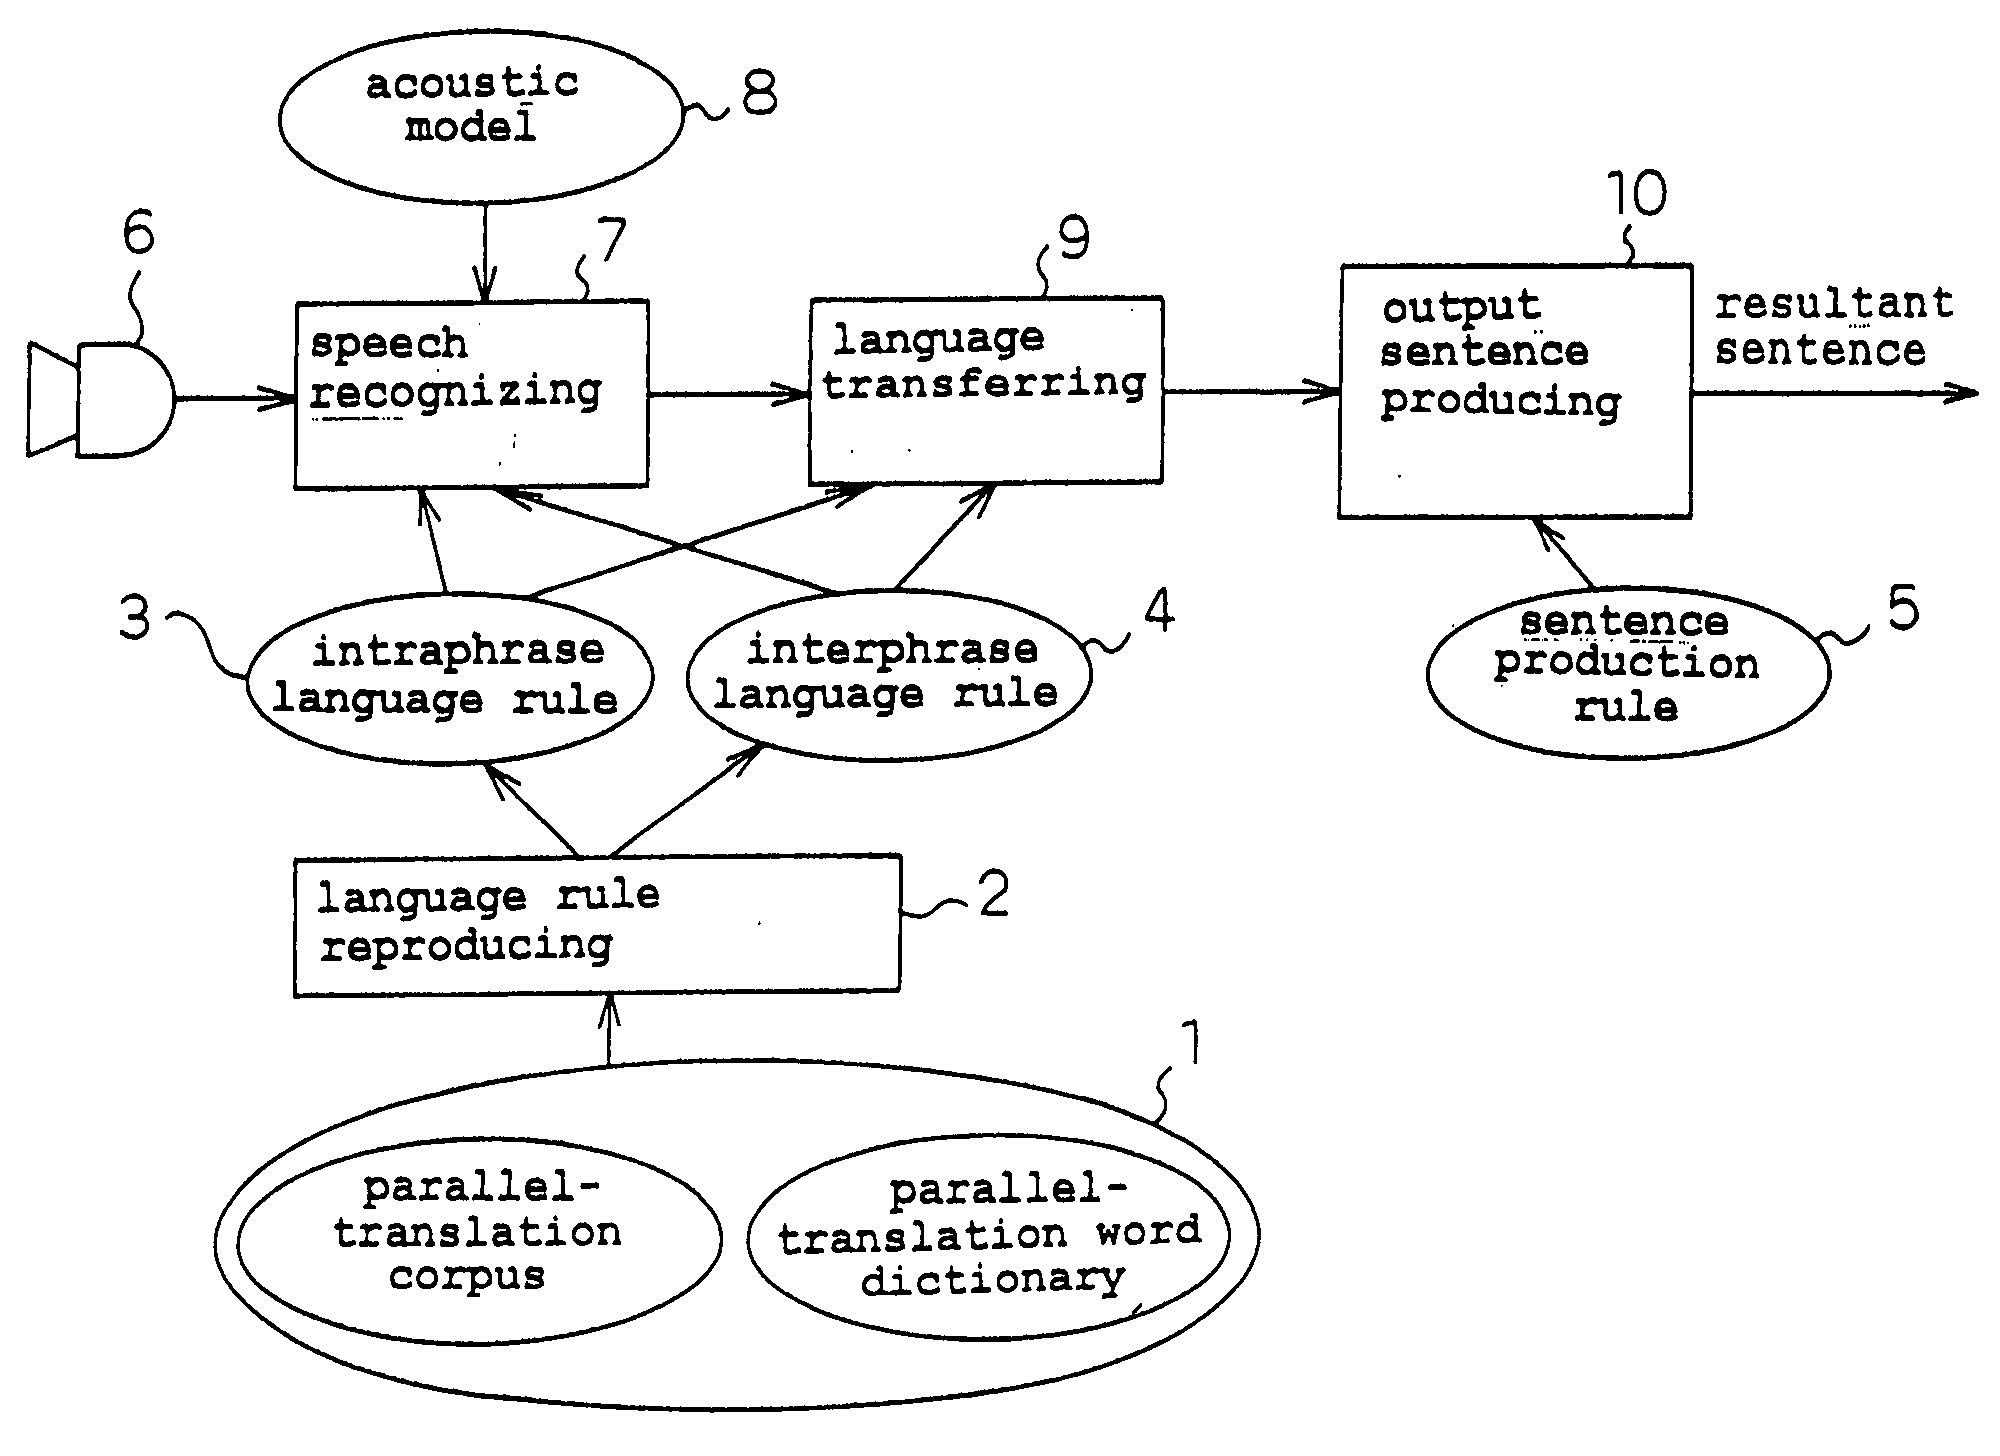 Language transference rule producing apparatus, language transferring apparatus method, and program recording medium